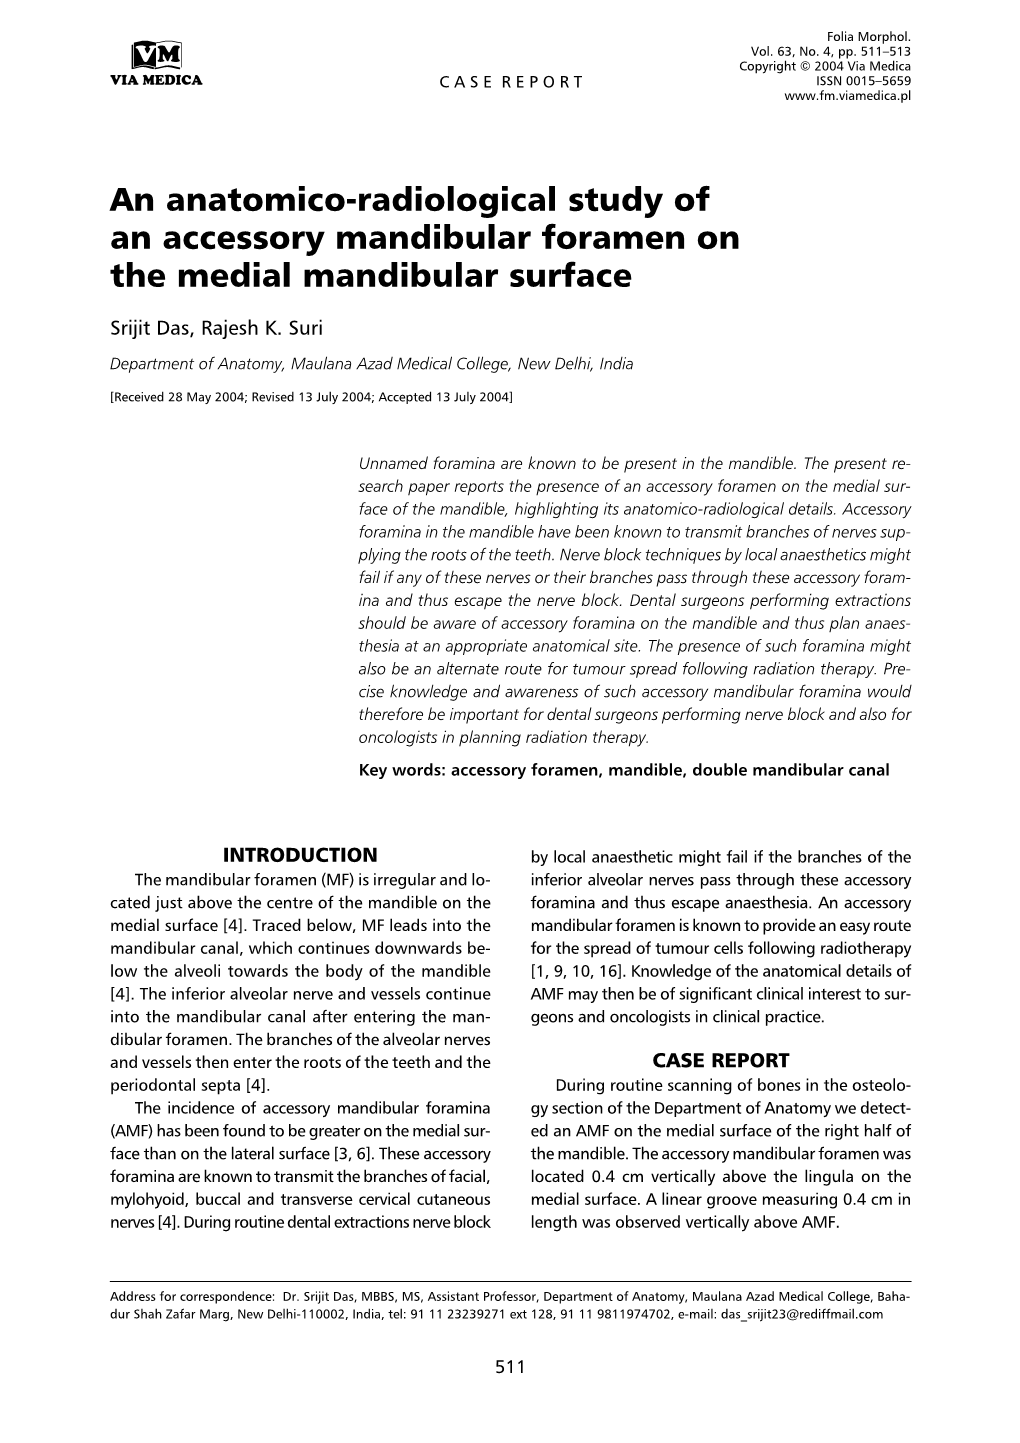 An Anatomico-Radiological Study of an Accessory Mandibular Foramen on the Medial Mandibular Surface